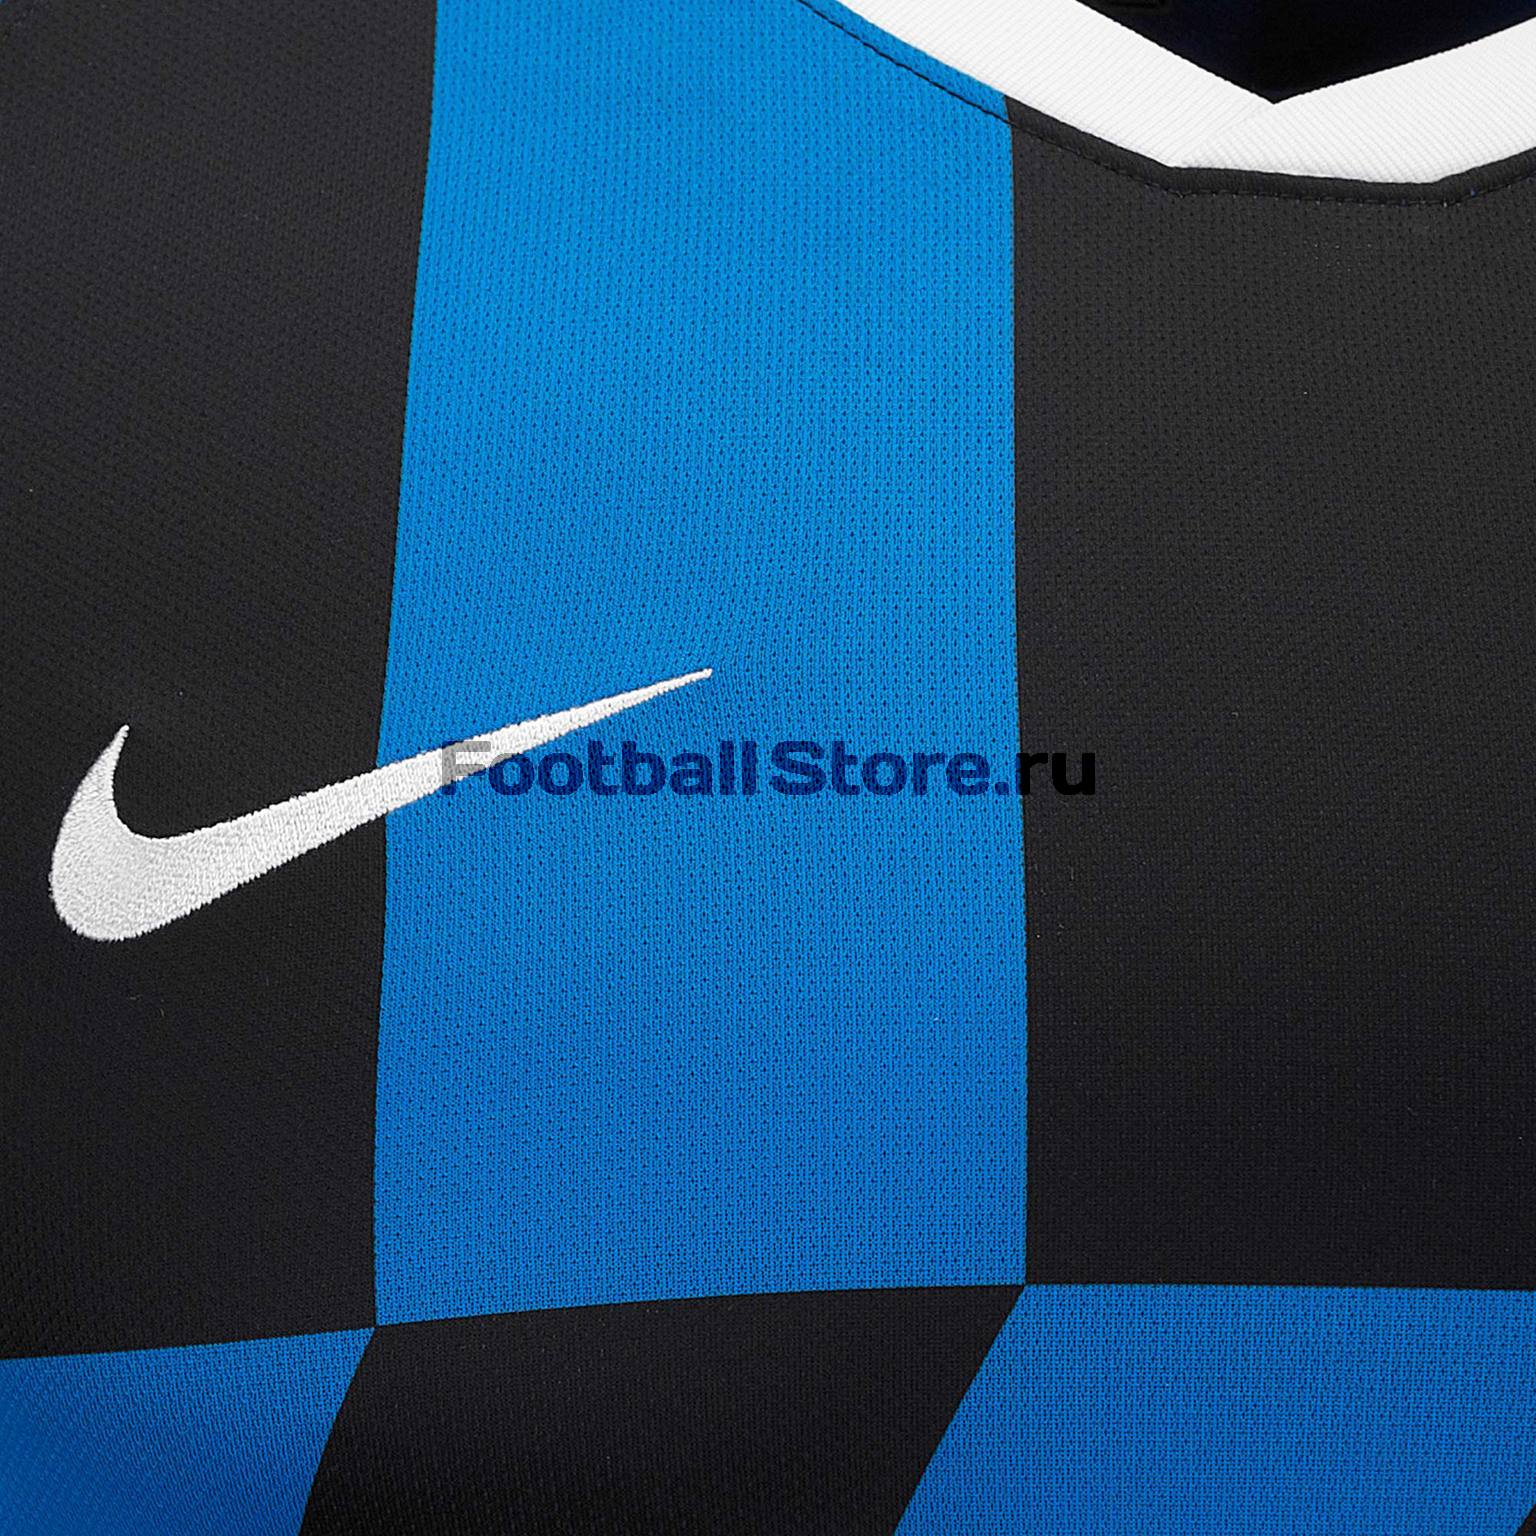 Футболка домашняя Nike Inter 2019/20